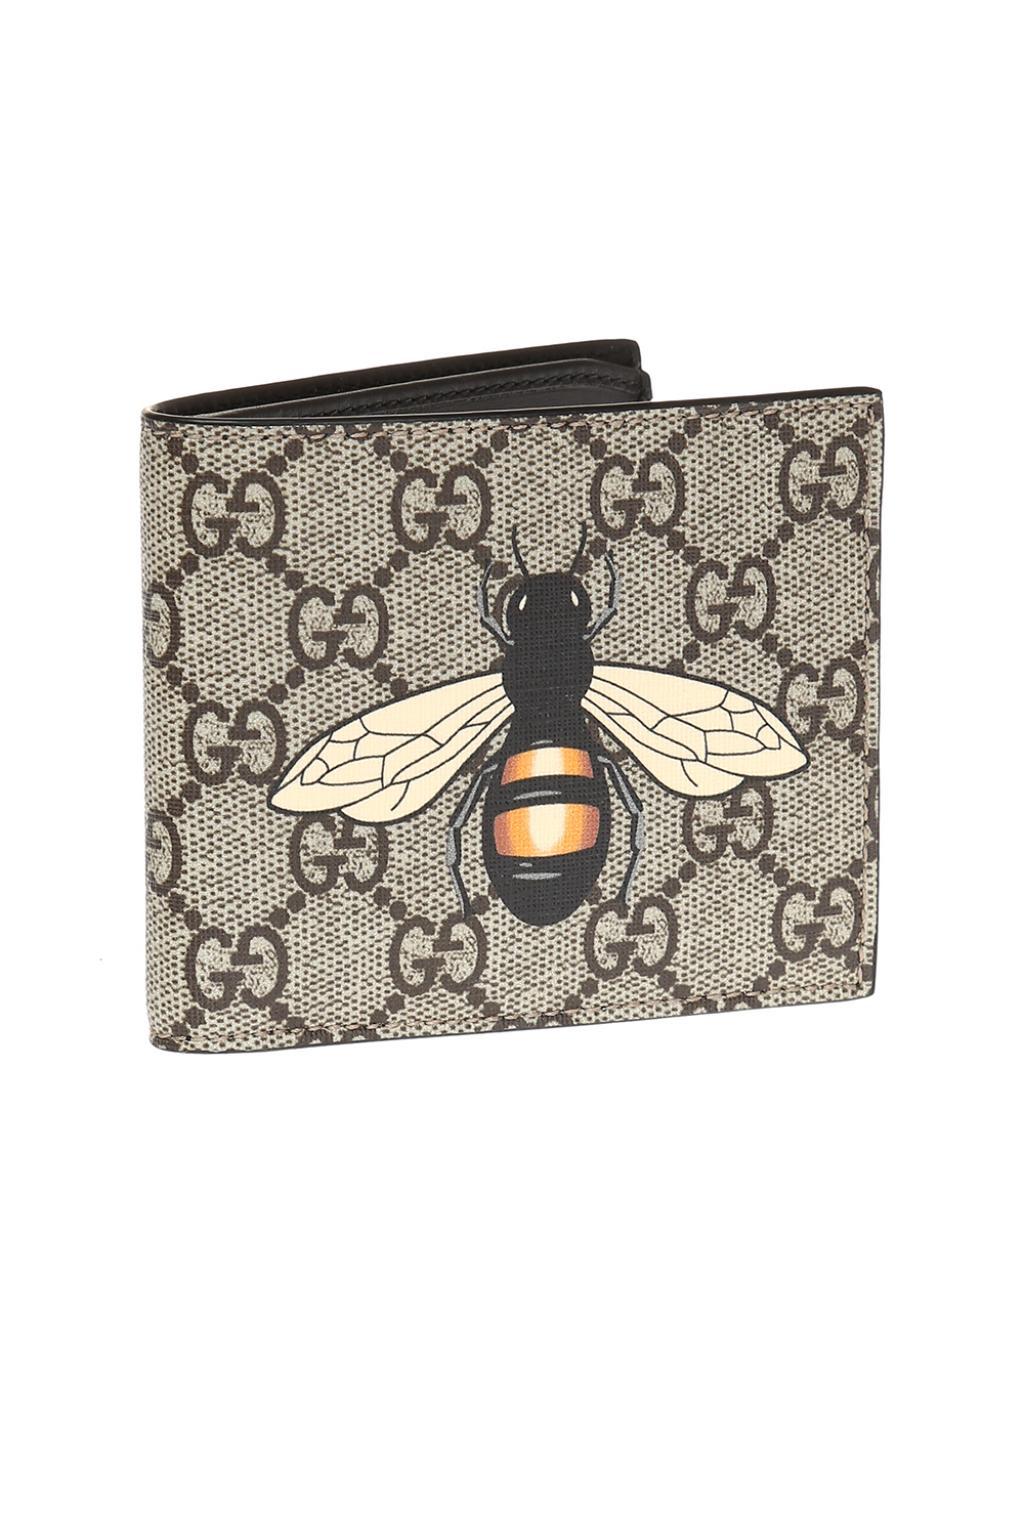 gucci bumblebee wallet